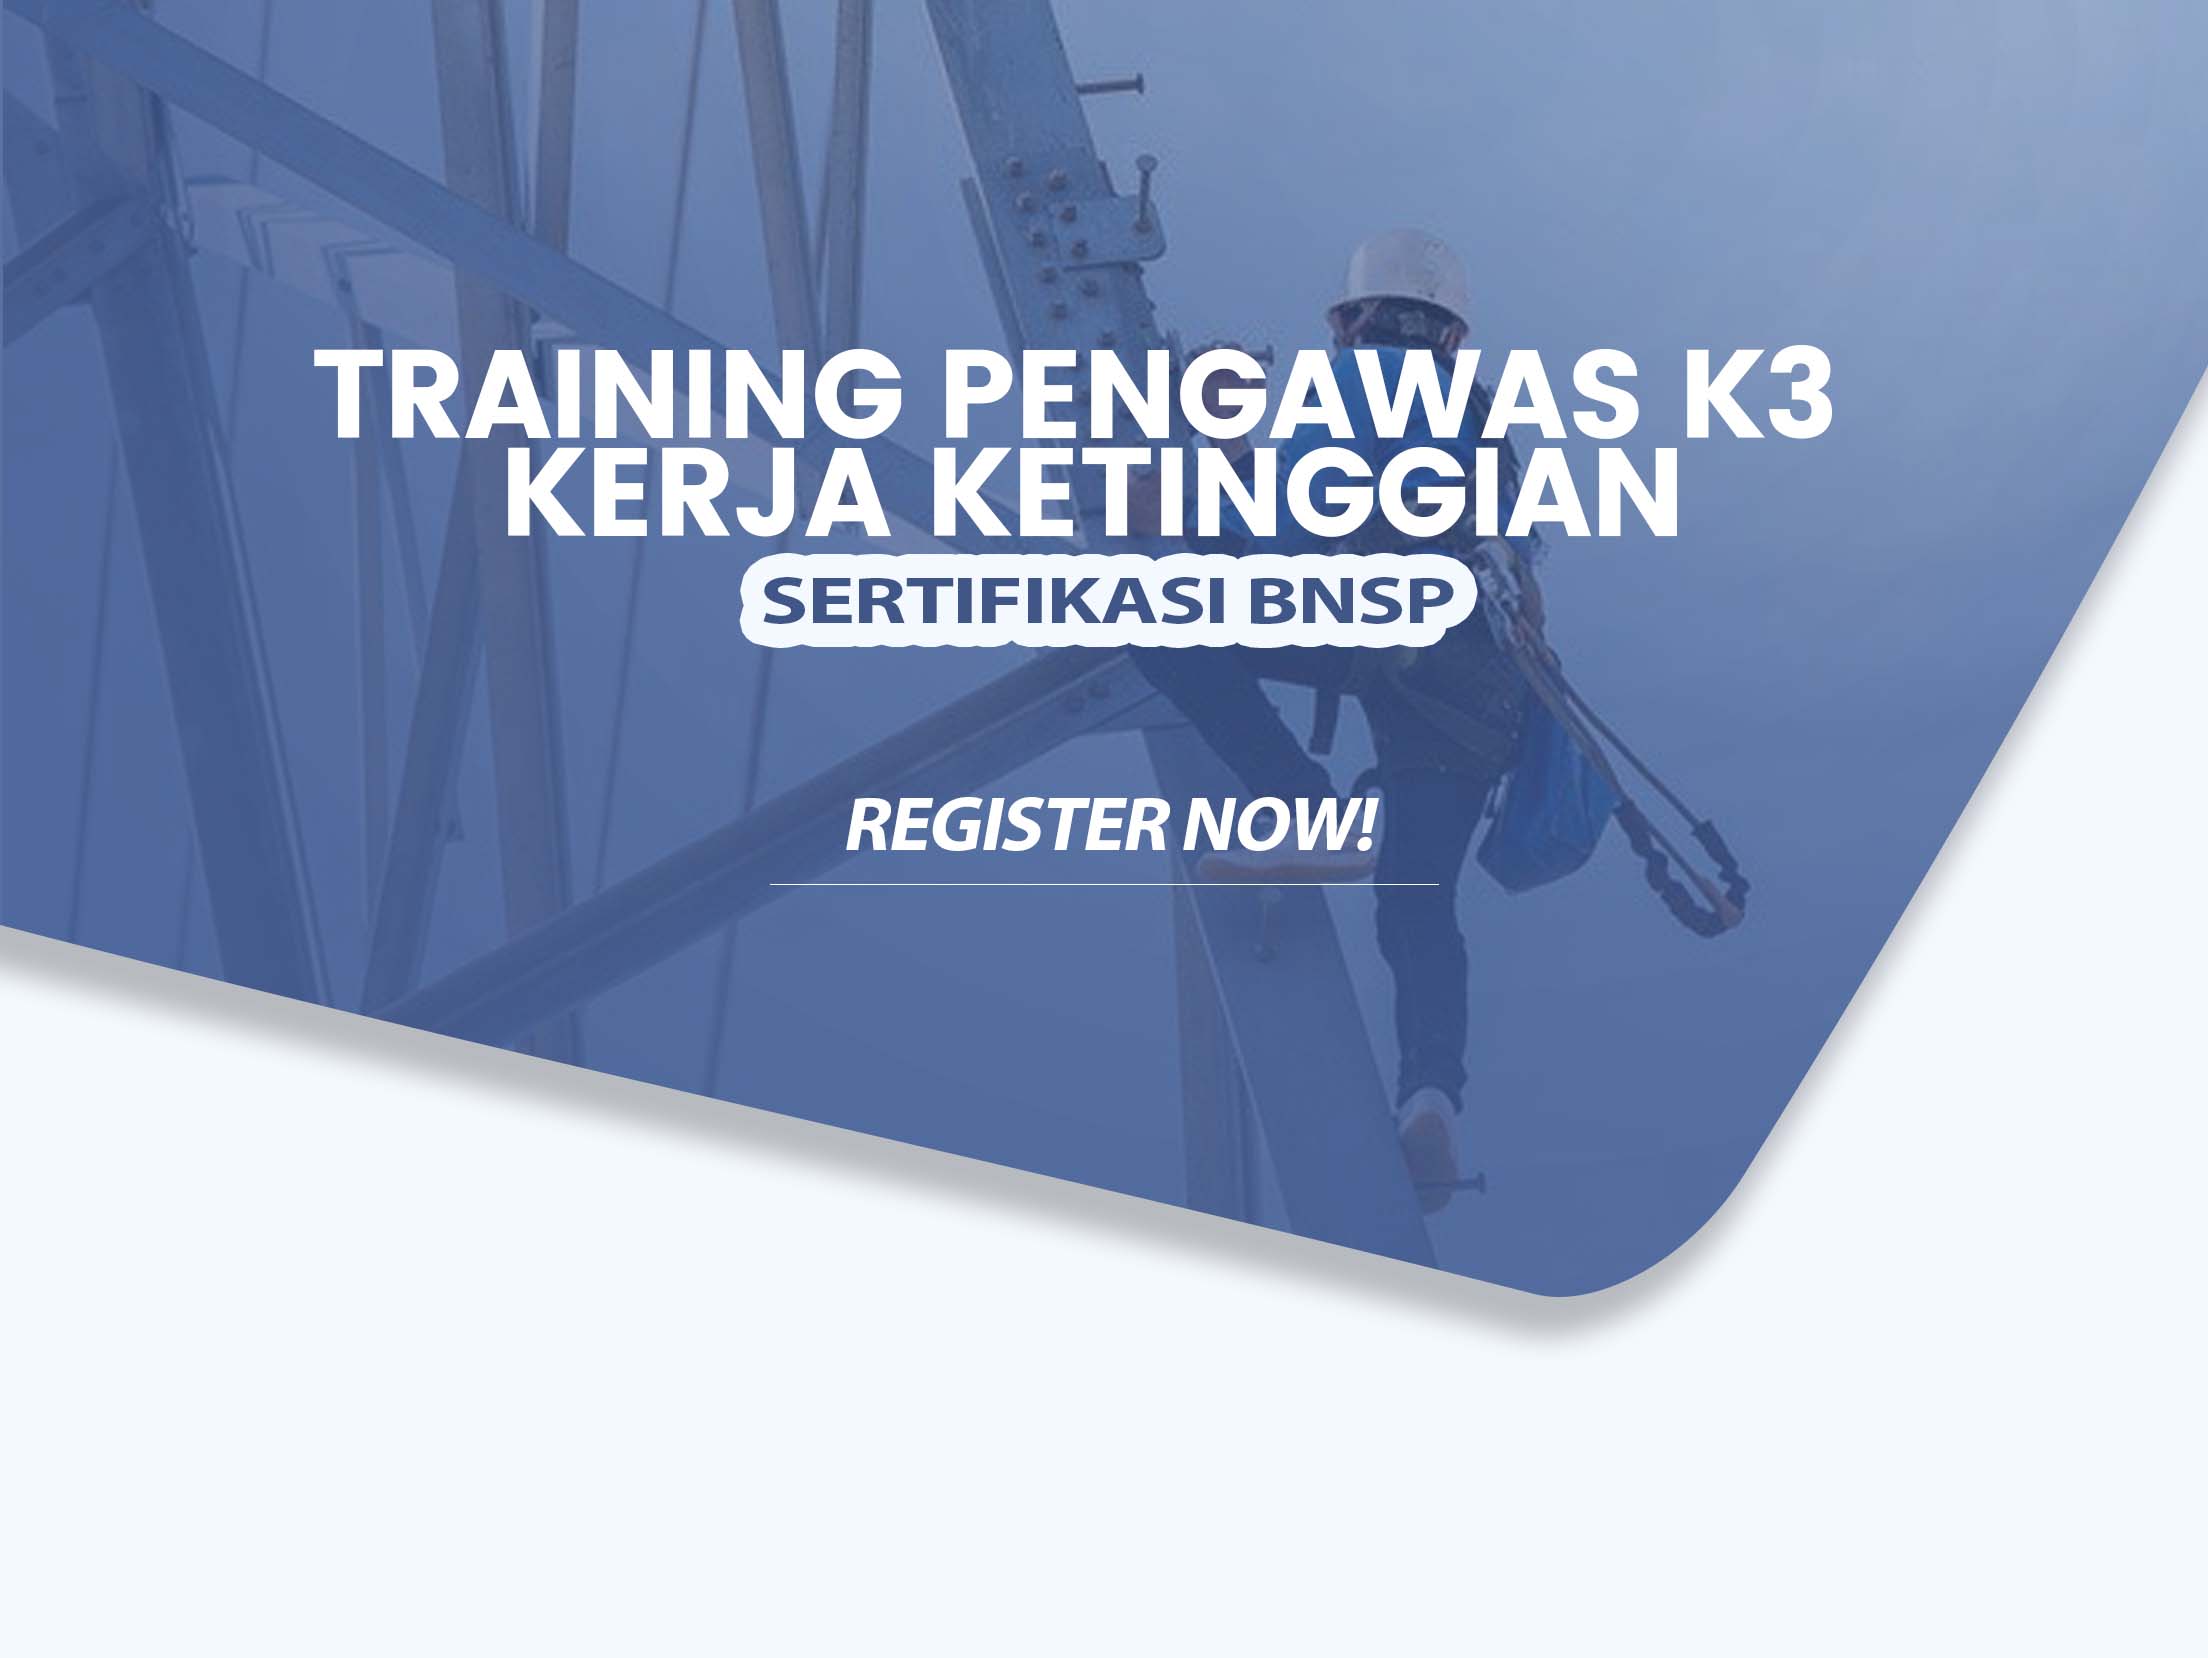 Training Pengawas K3 Kerja Ketinggian